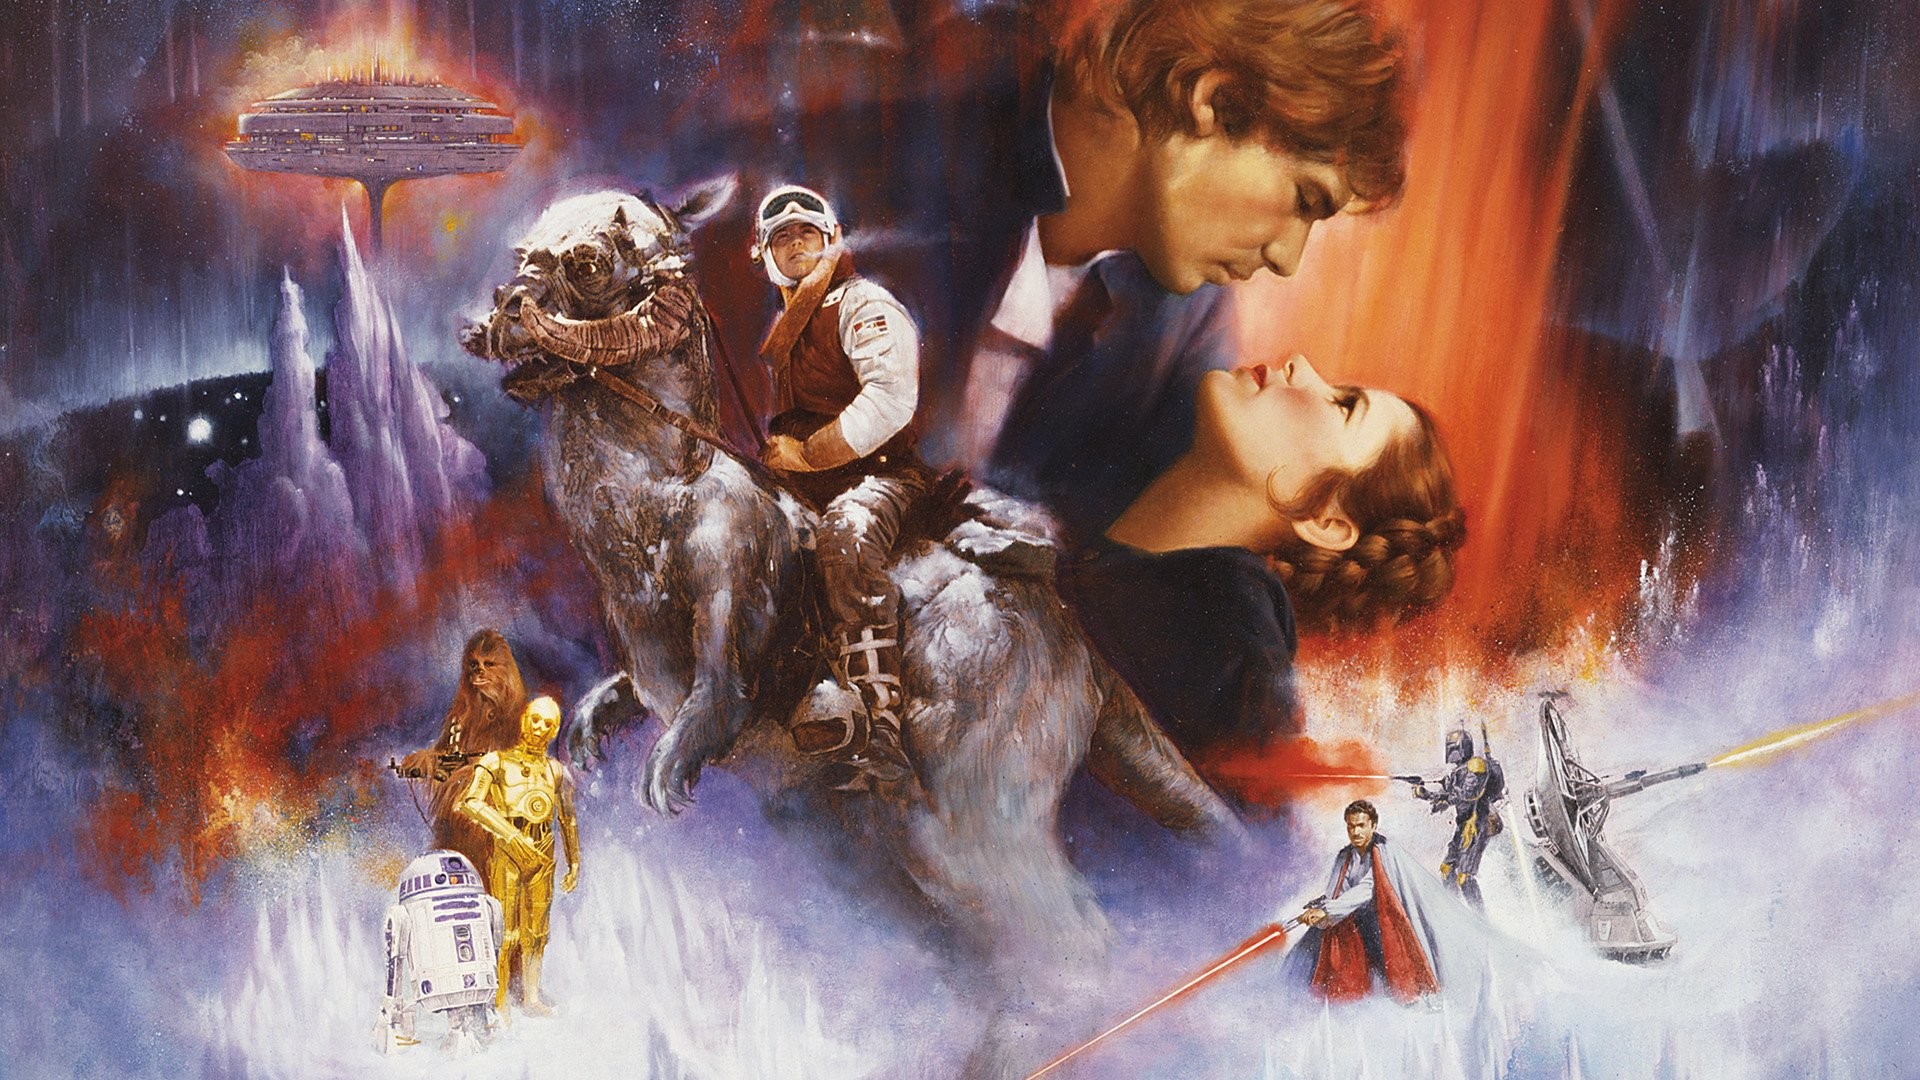 Star Wars Empire Strikes Back Wallpaper images